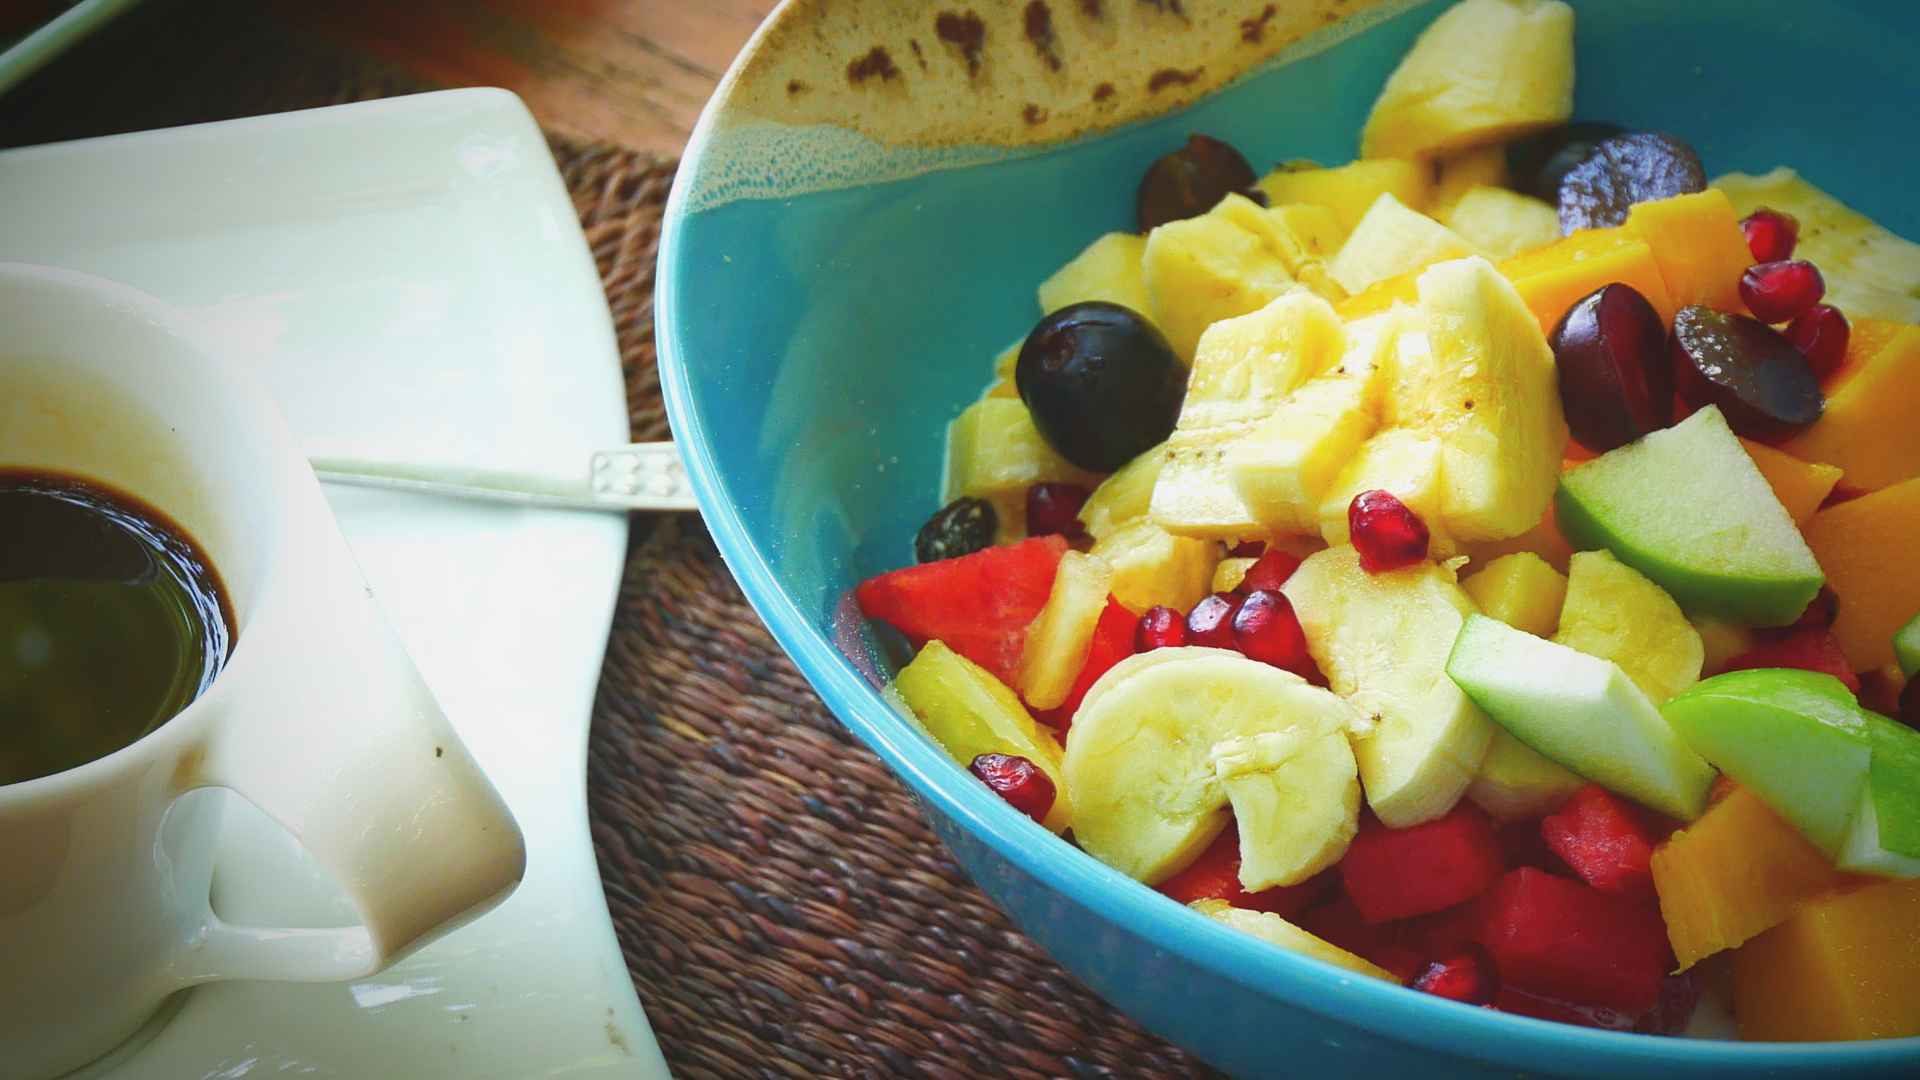 Healthy food - coffee and fruit salad